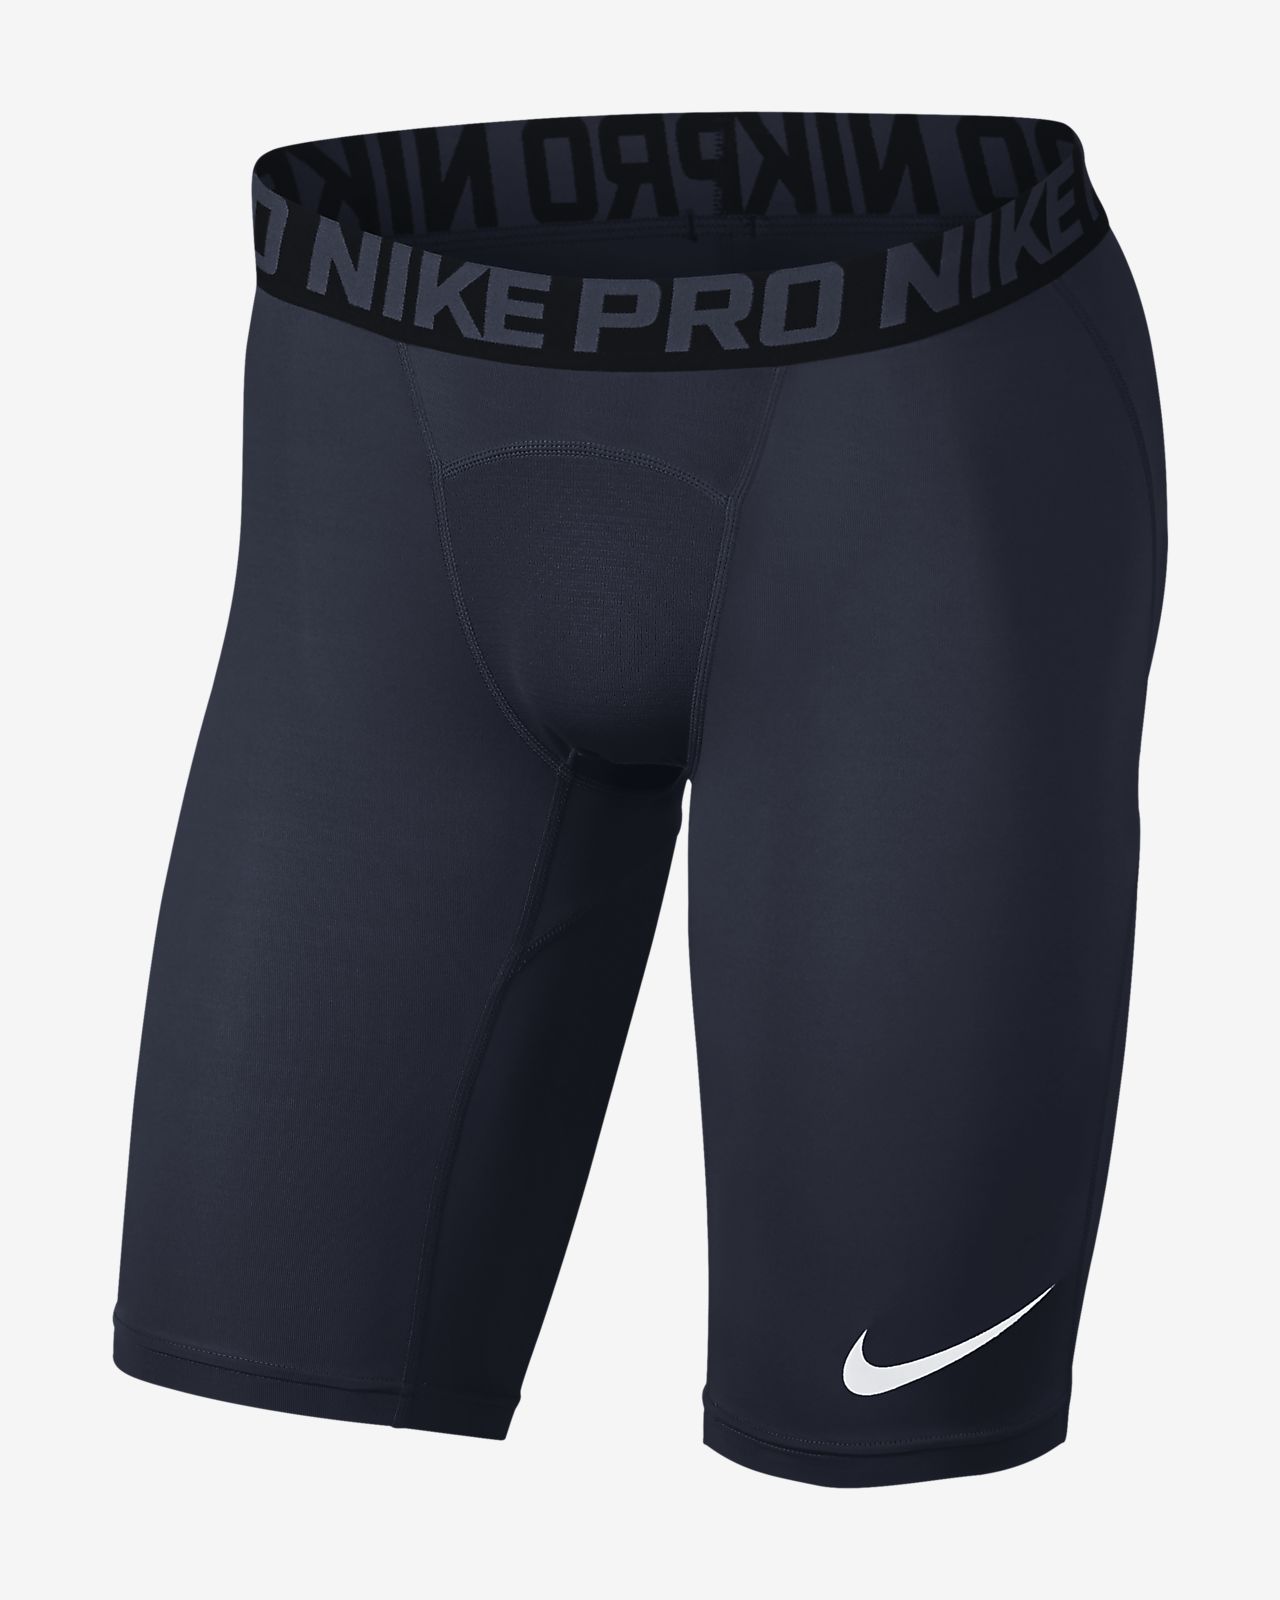 Nike Combat Shorts Size Chart